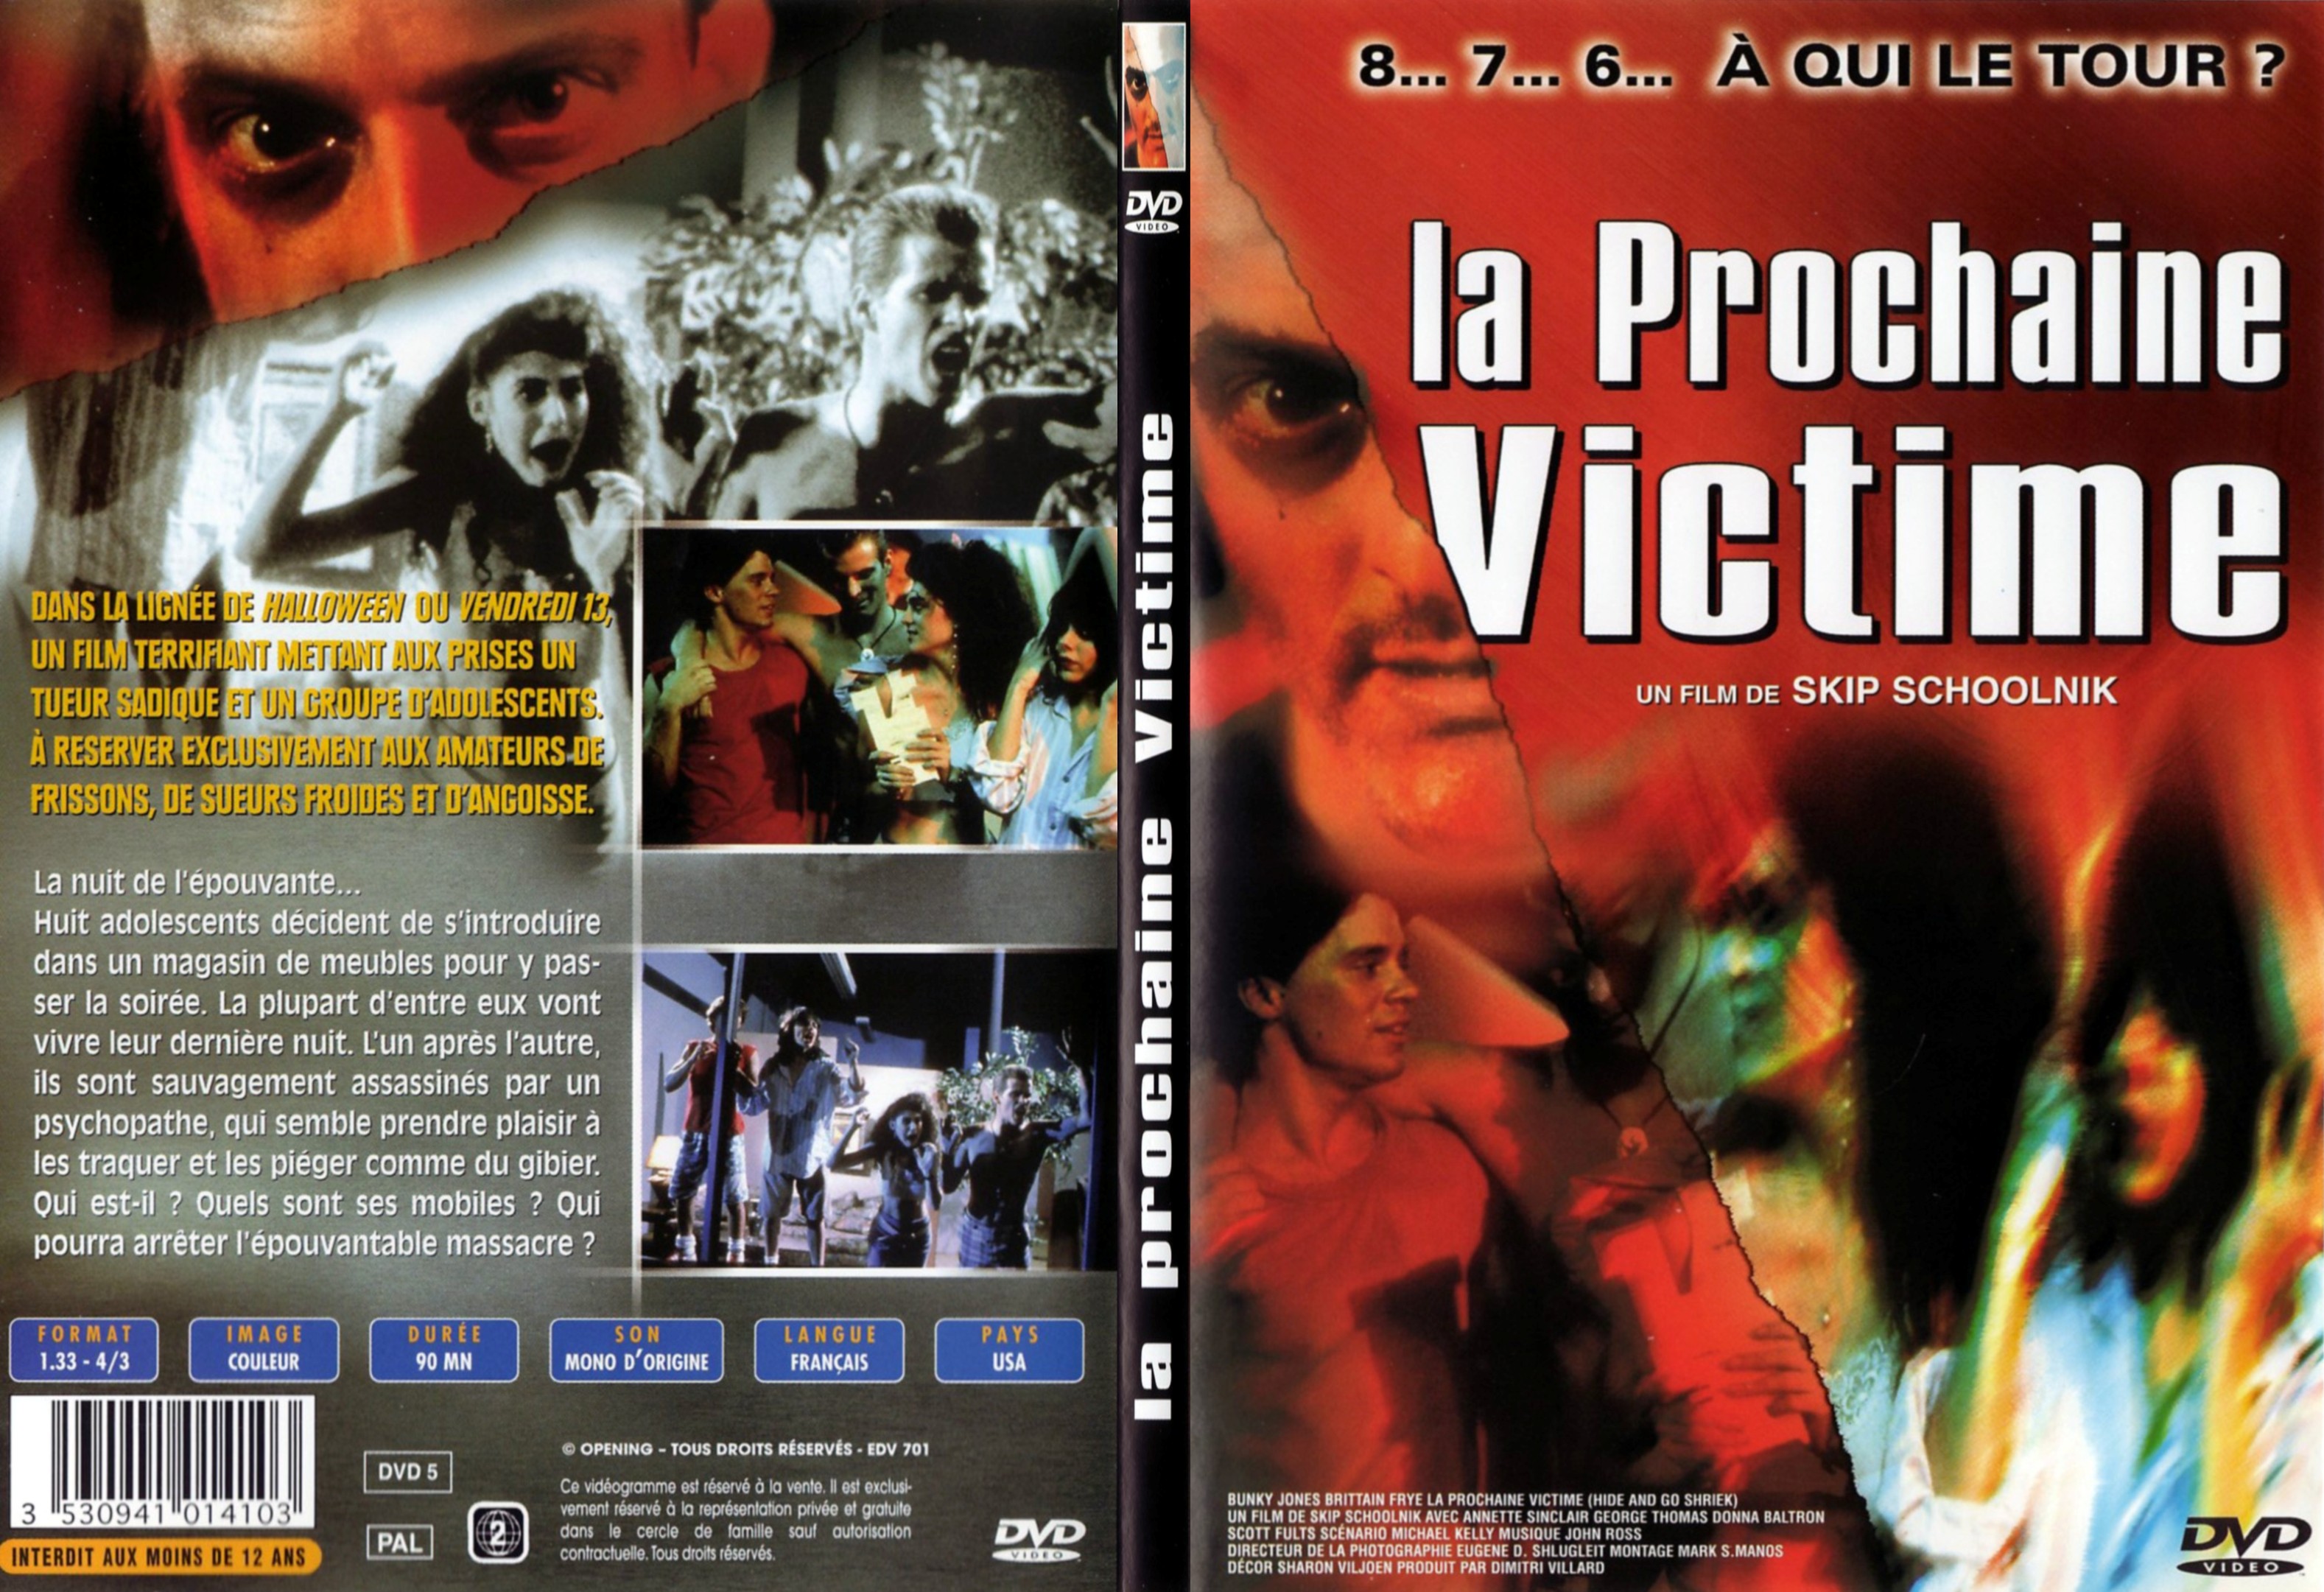 Jaquette DVD La prochaine victime - SLIM